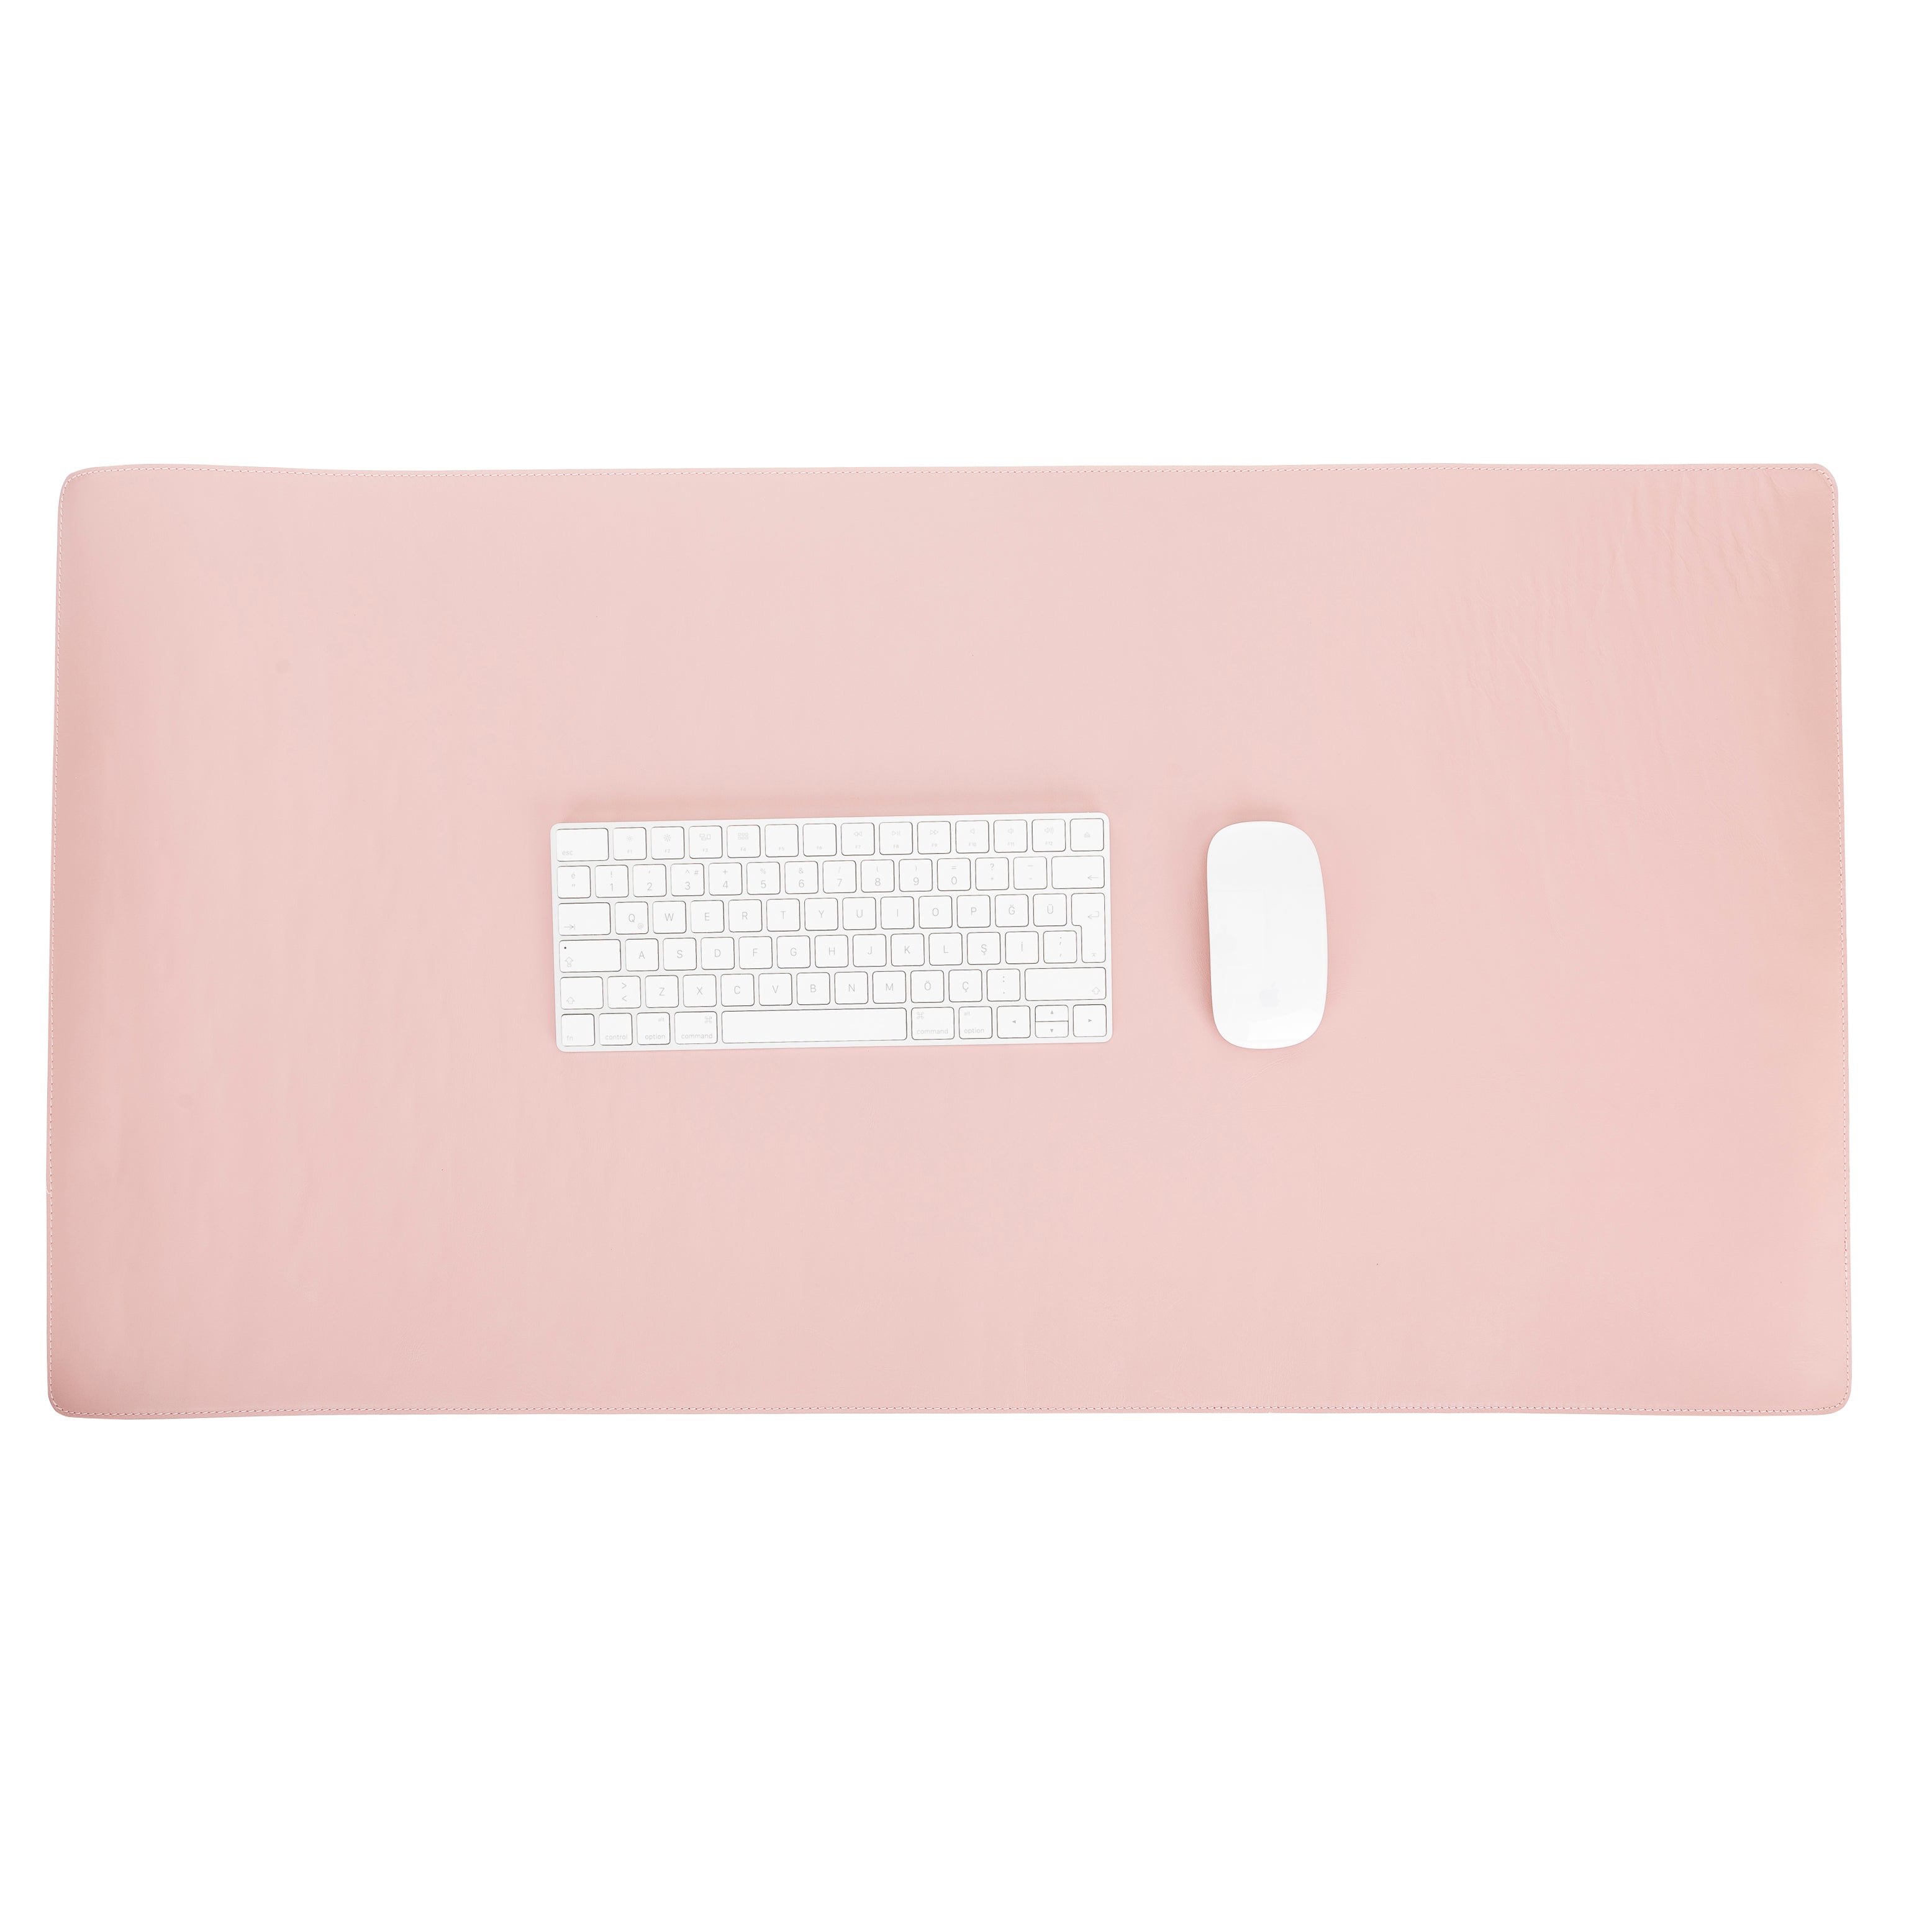 DelfiCase Genuine Leather Deskmat, Computer Pad, Office Desk Pad (Pink Nude) 7